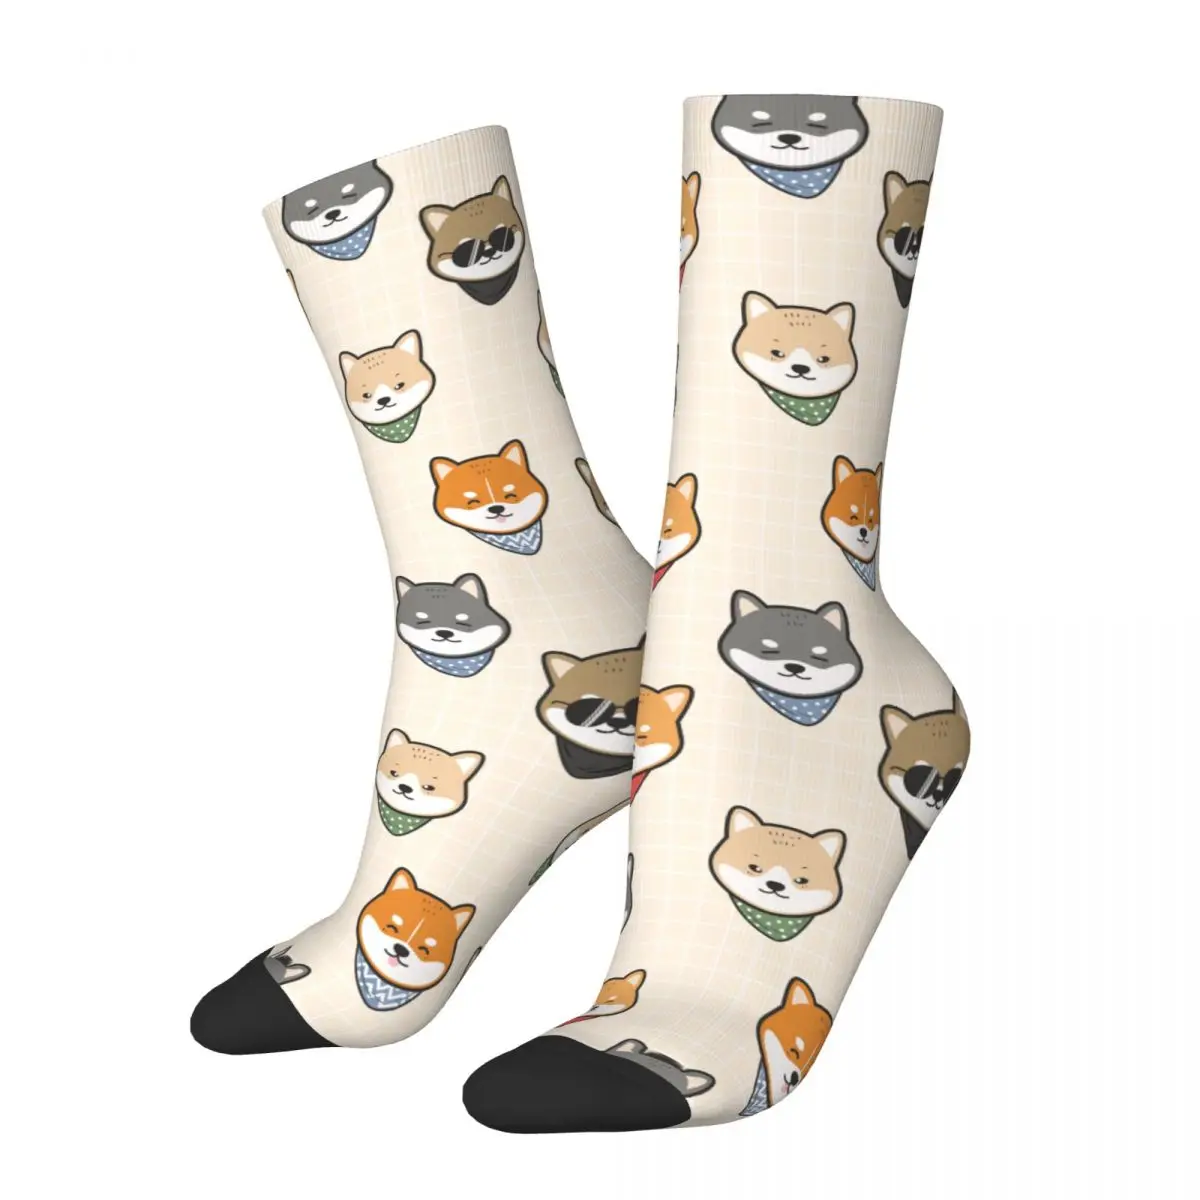 S Shiba Inu Owner Merch Soccer Socks Soft Best Gift Idea